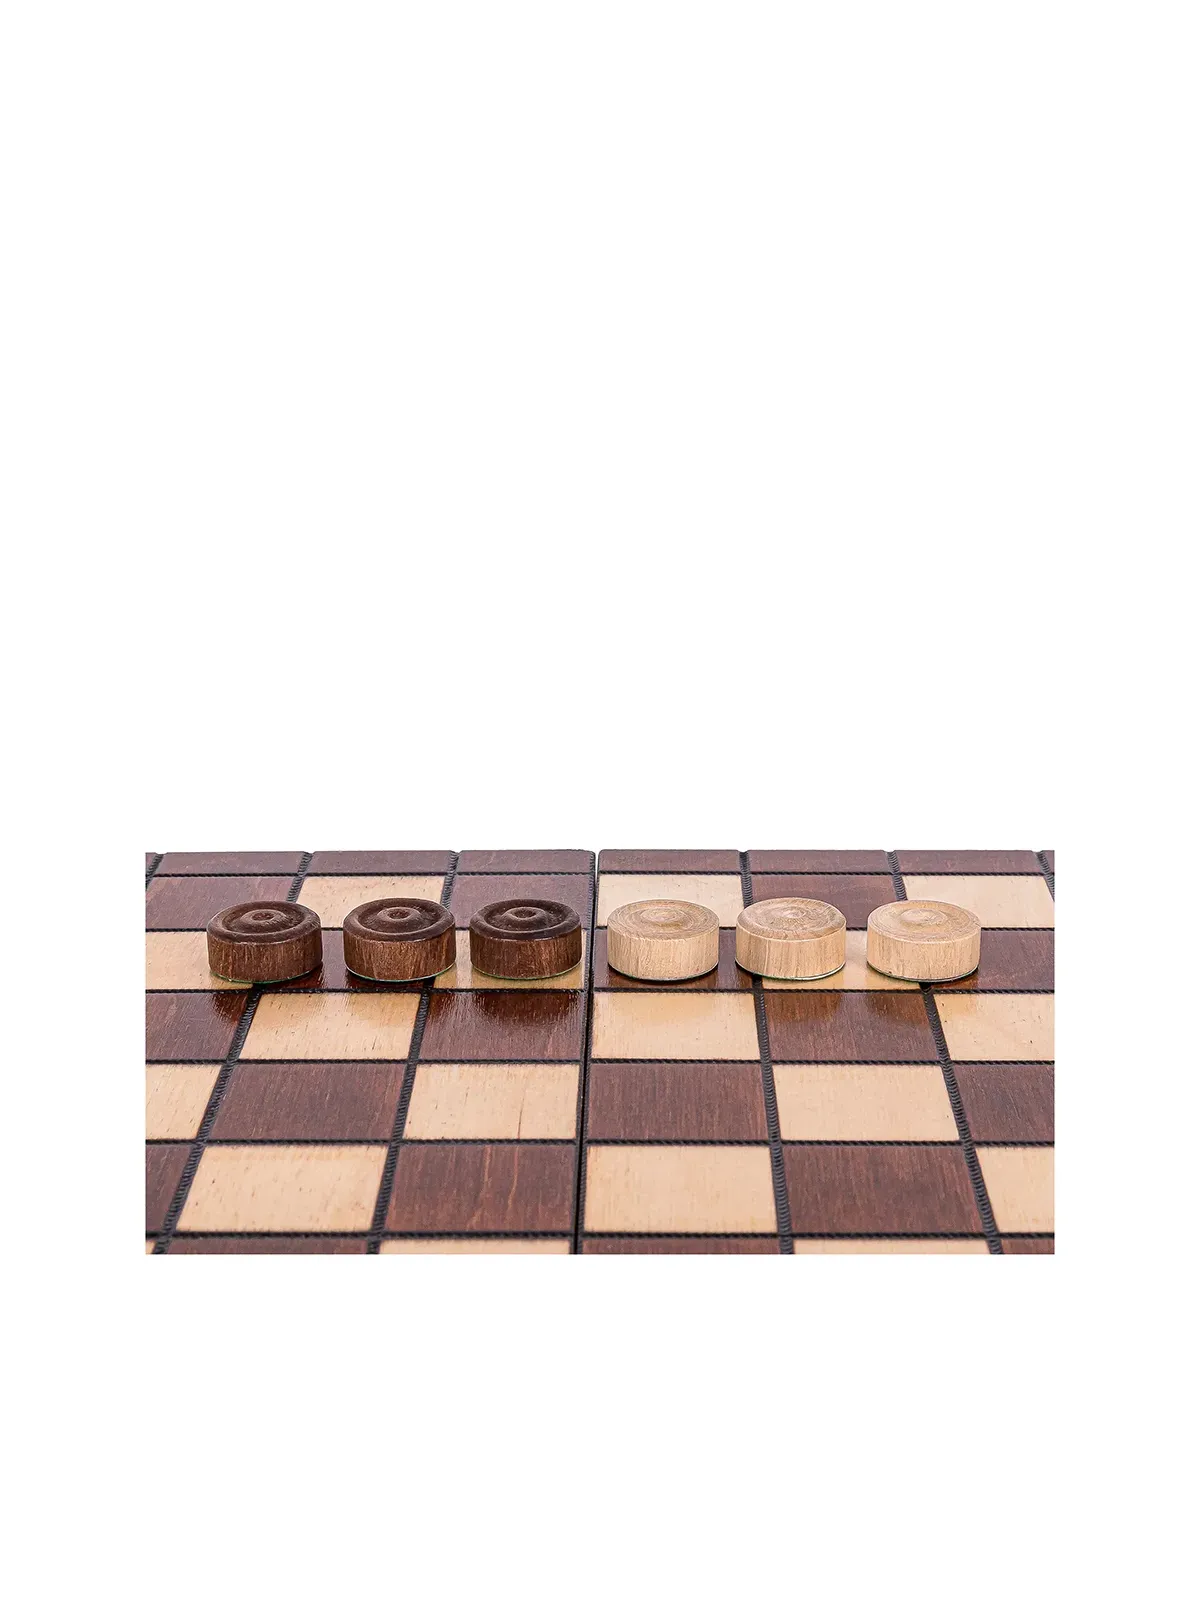 Checkers 100 Fields -  Online Chess Shop -  sklep-szachy.pl